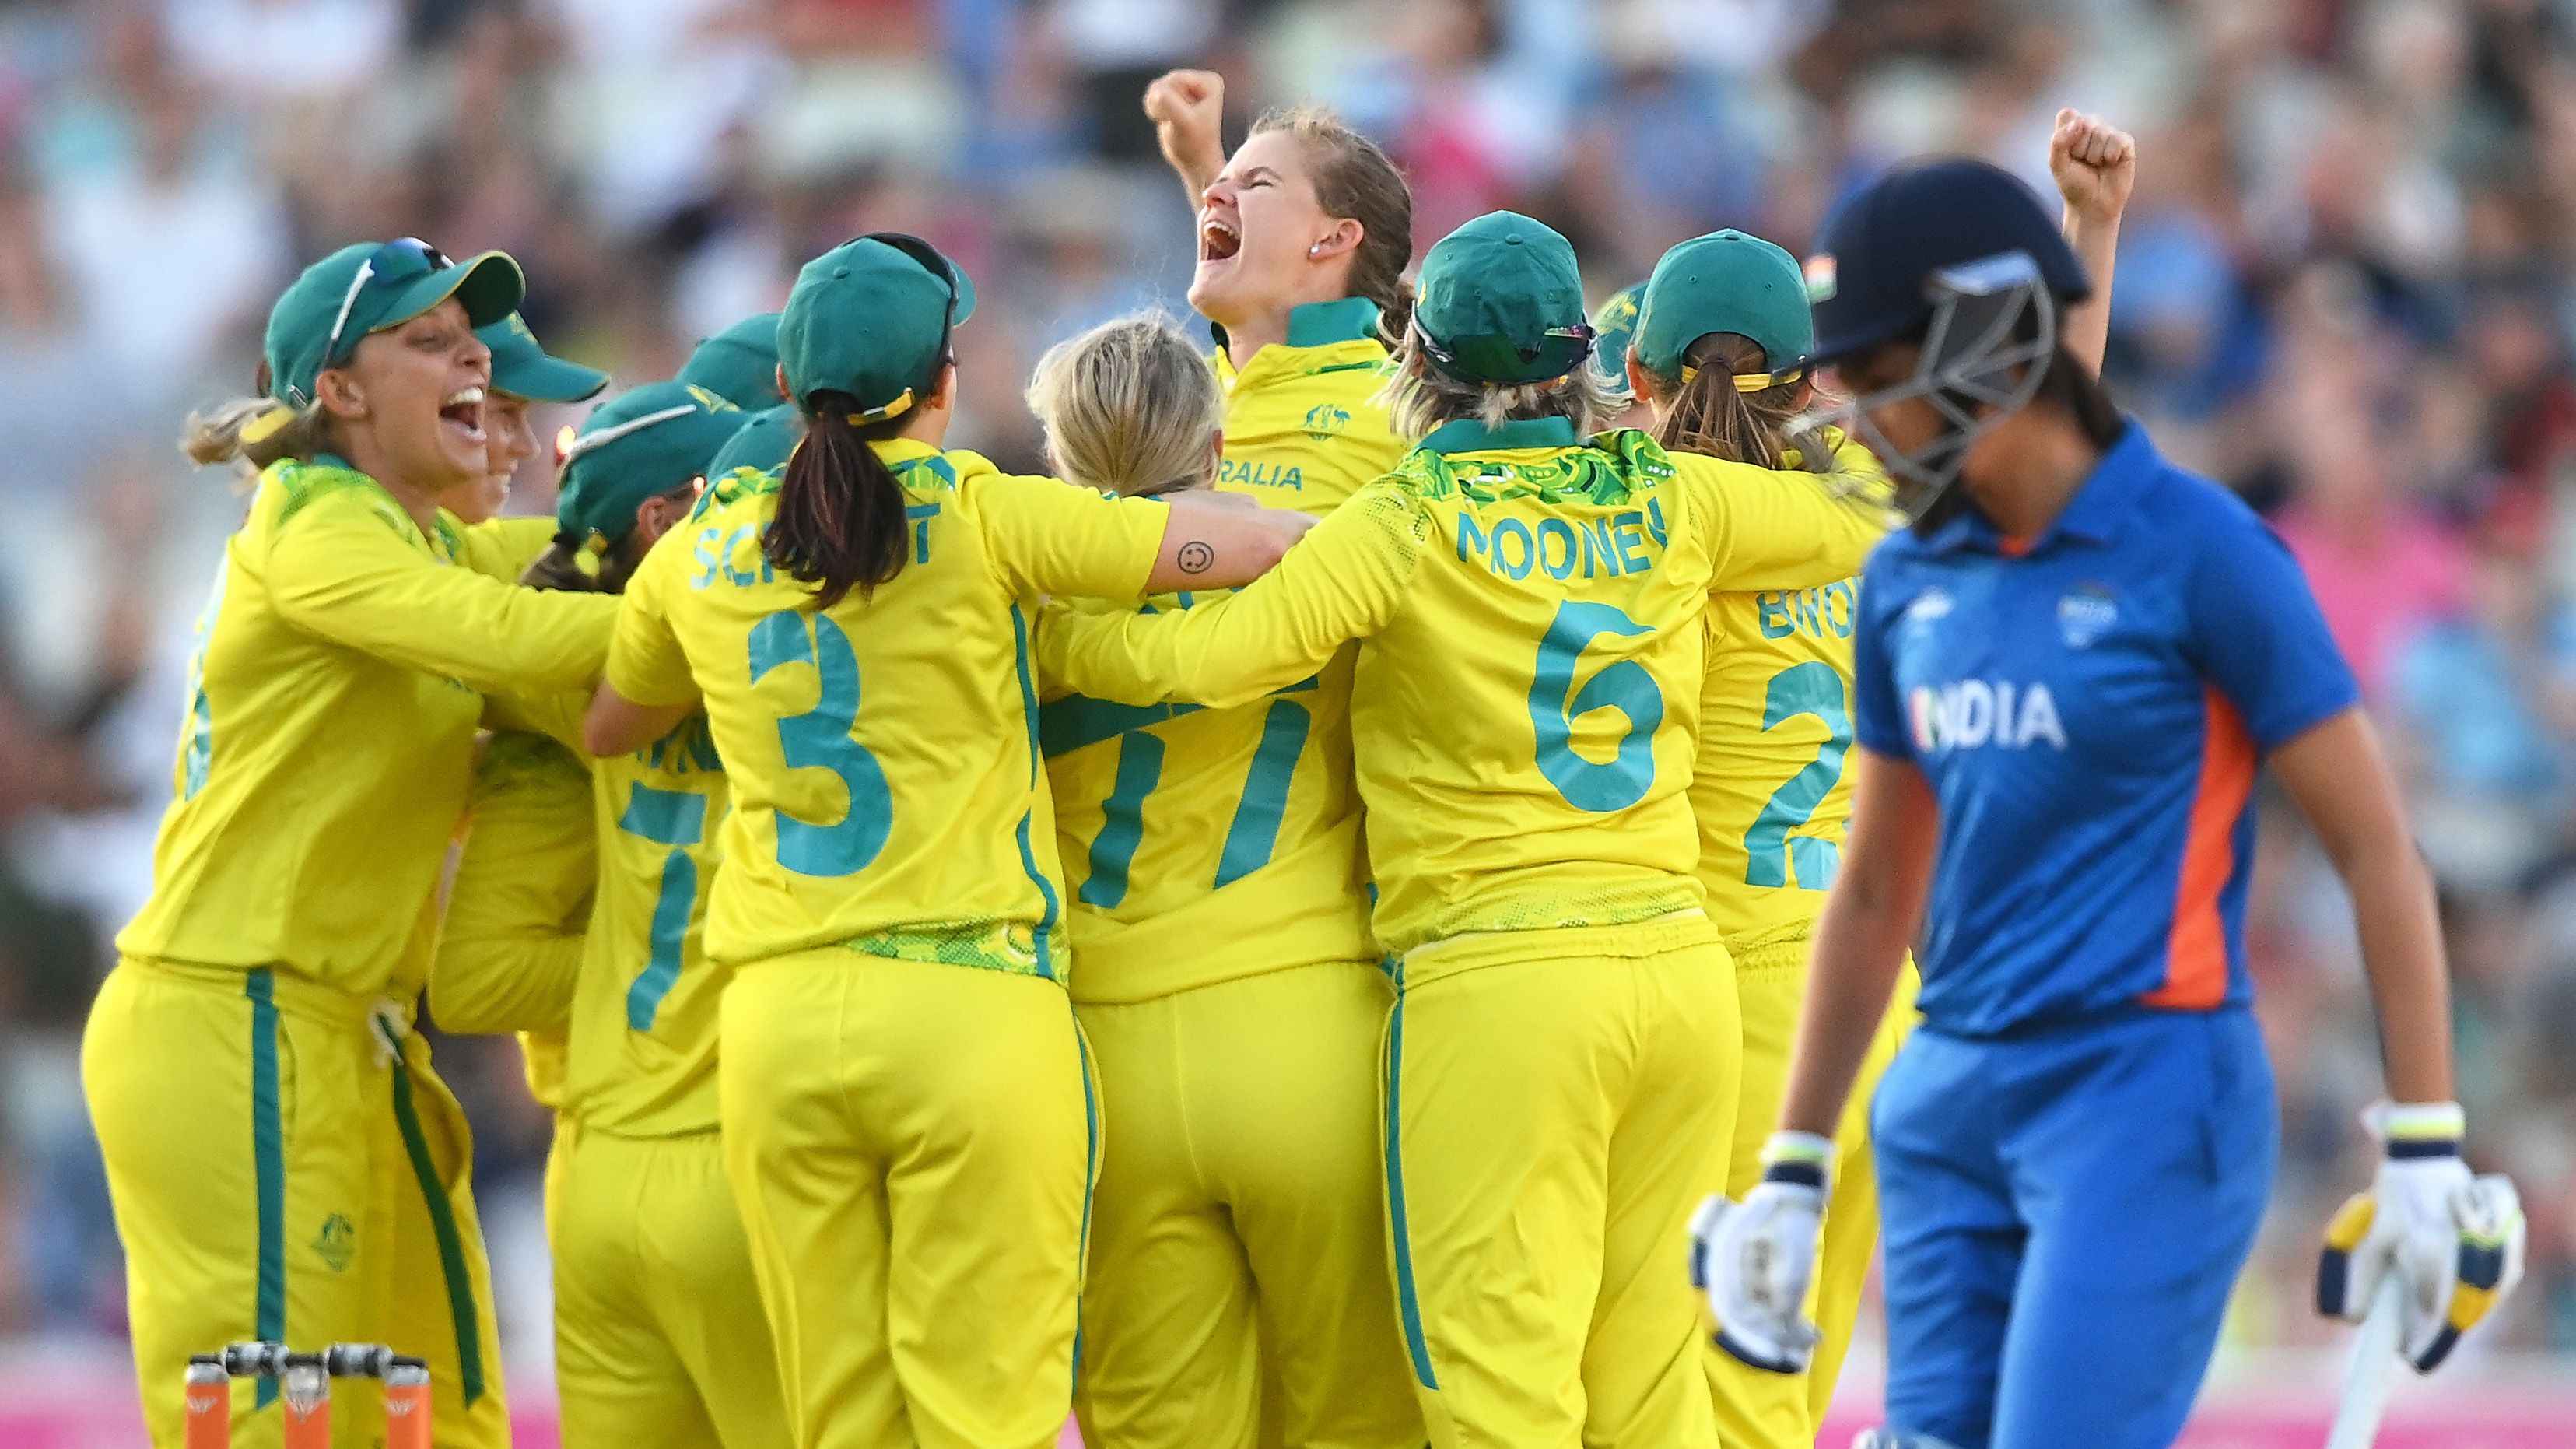 Aussies claim cricket gold despite positive COVID-19 test for Tahlia McGrath